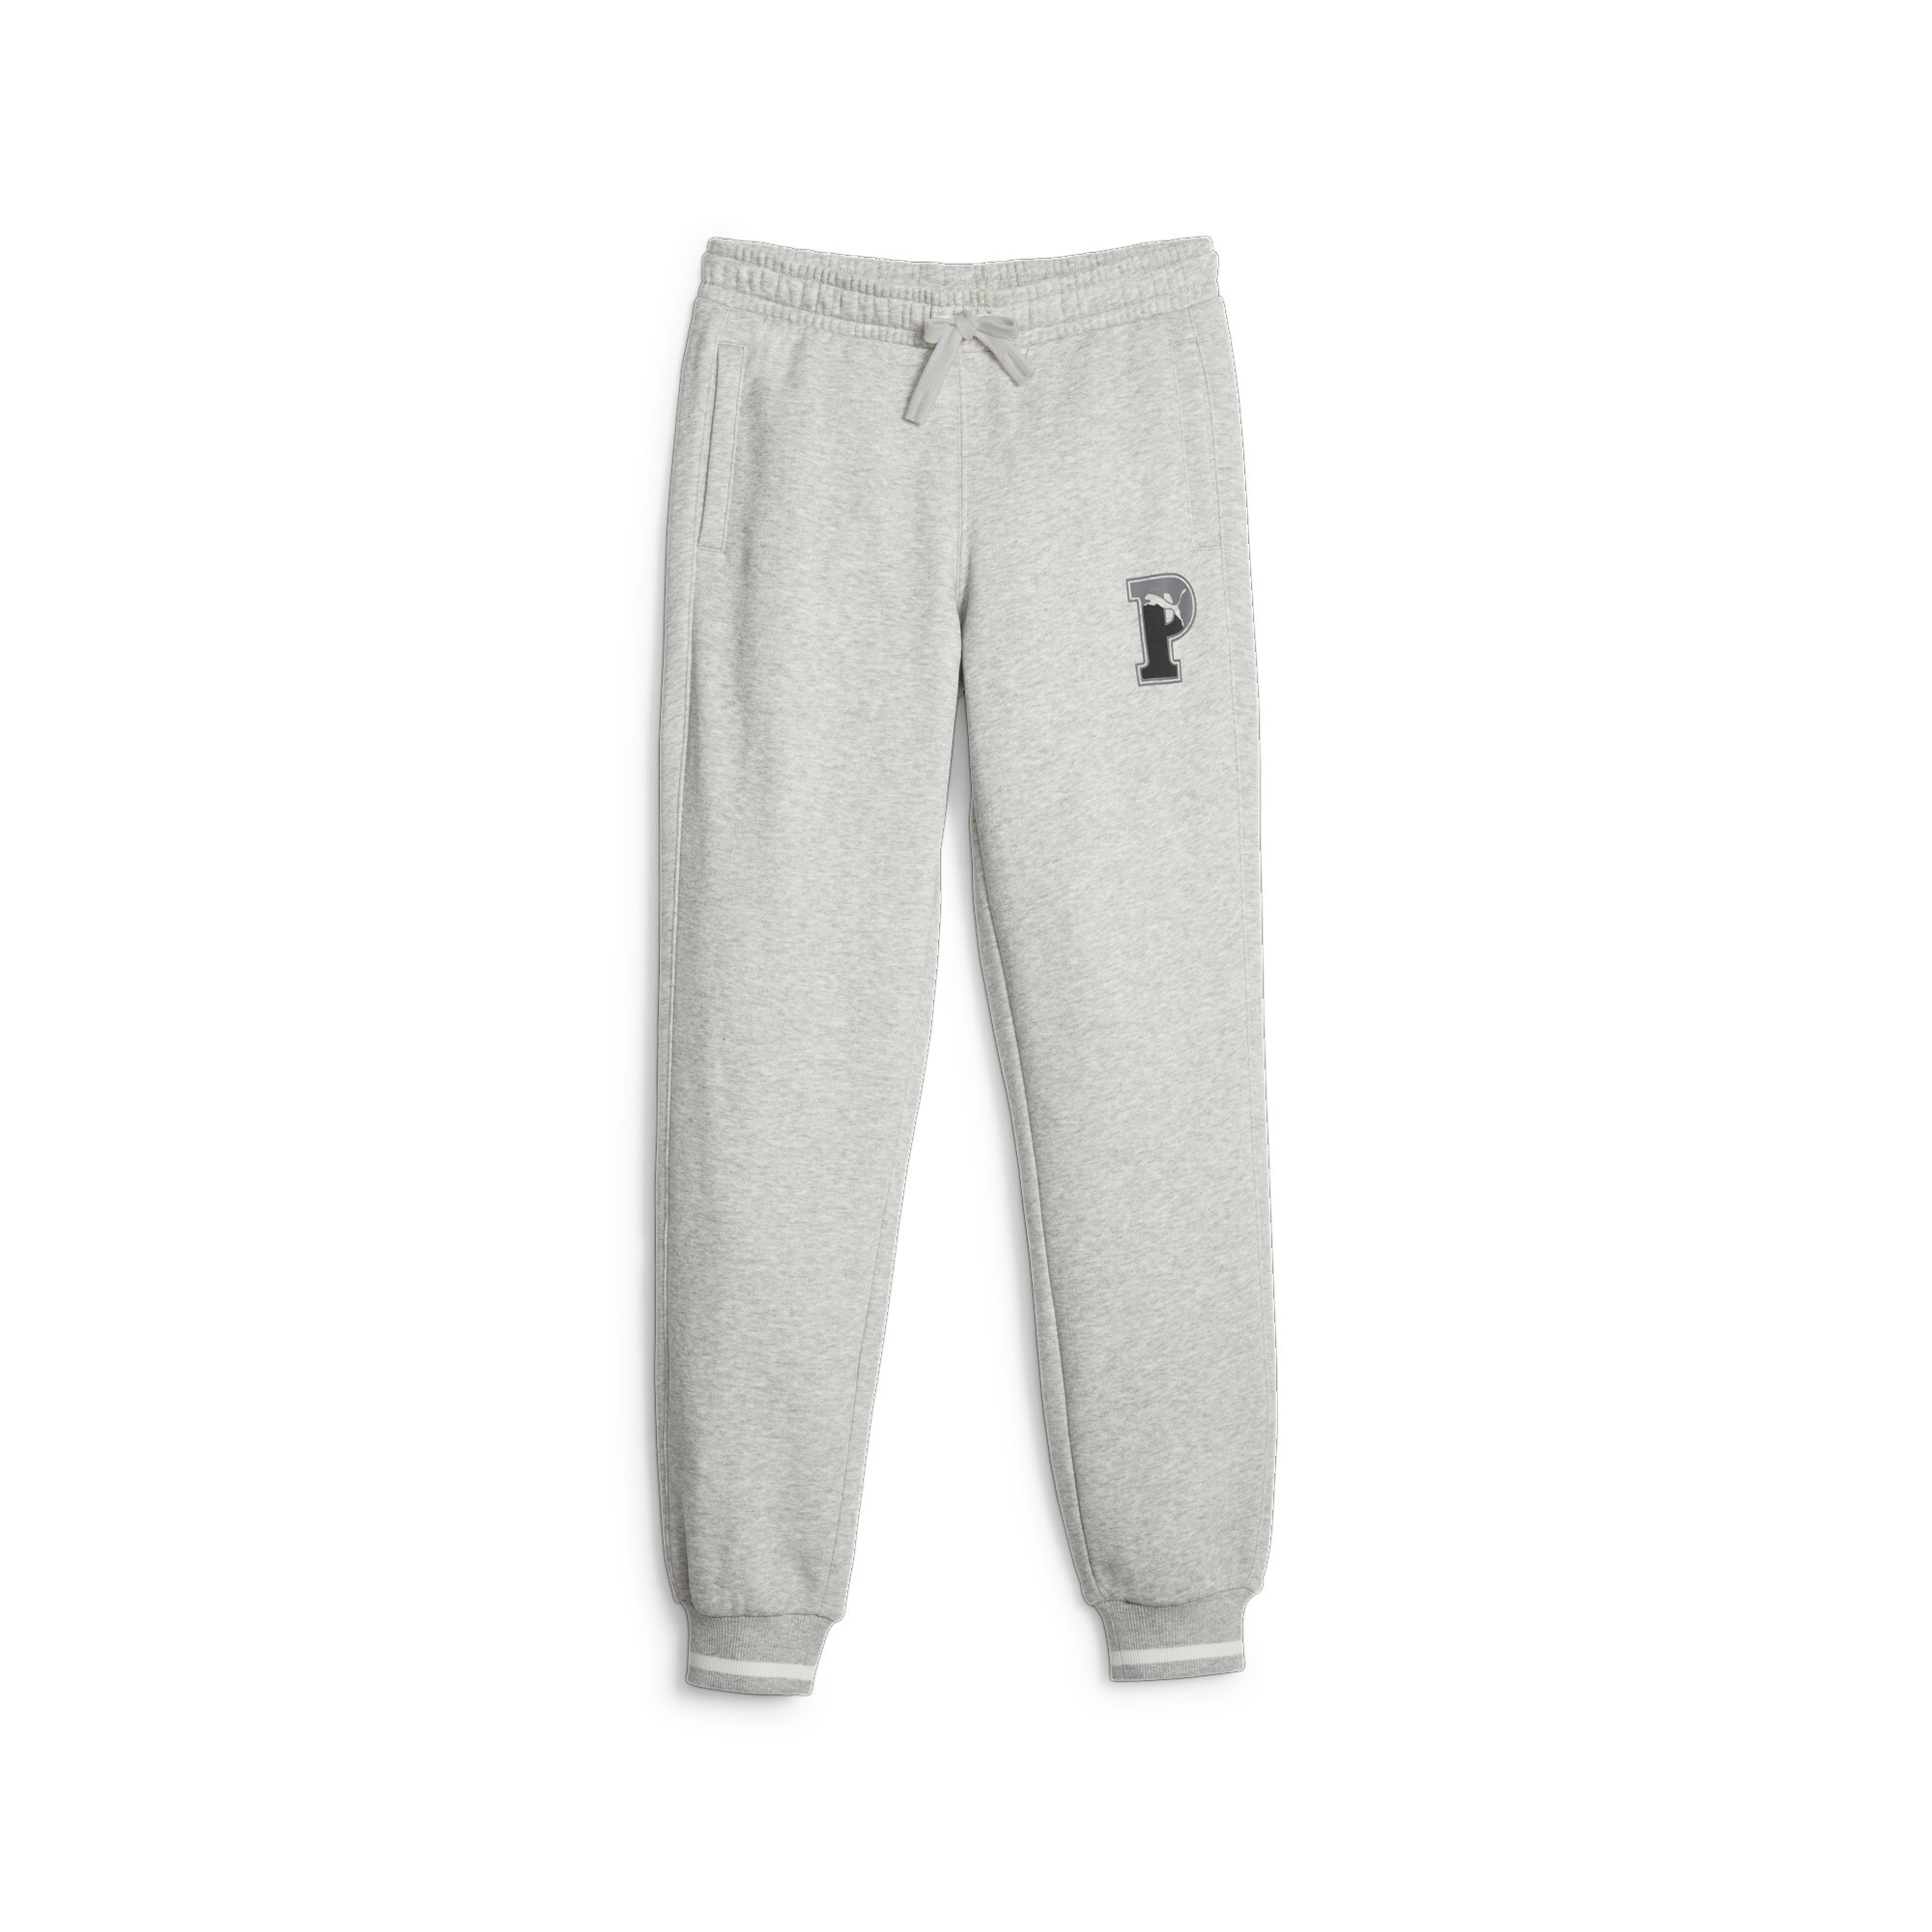 Women's Puma SQUAD Youth Sweatpants, Gray, Size 7-8Y, Clothing